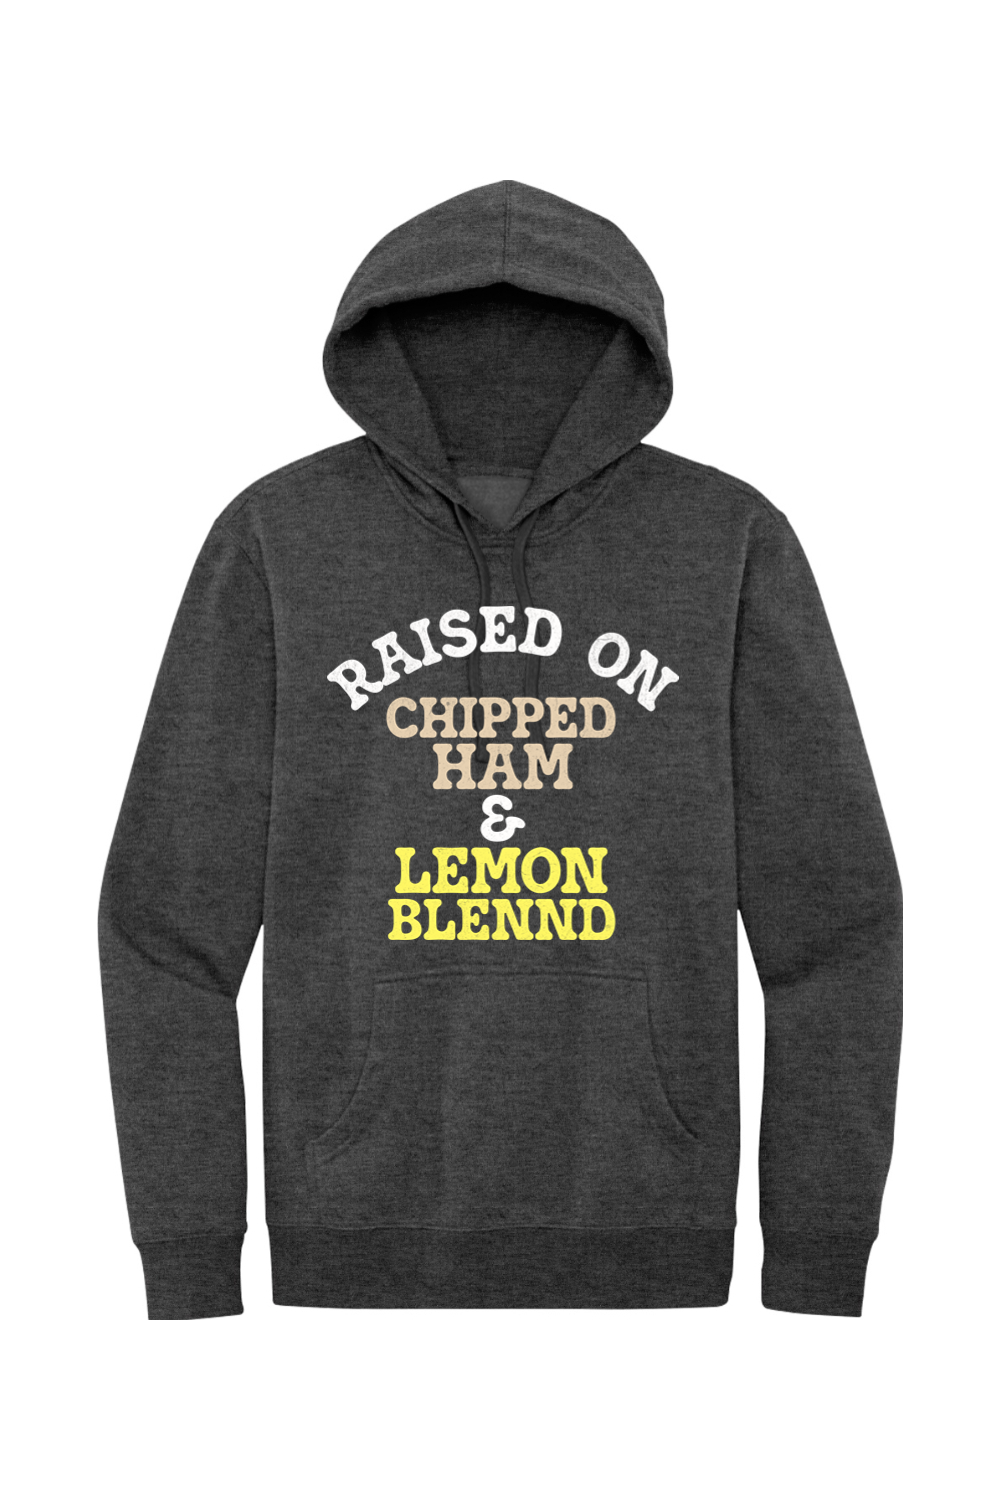 Raised on Chipped Ham & Lemon Blennd - Fleece Hoodie - Yinzylvania